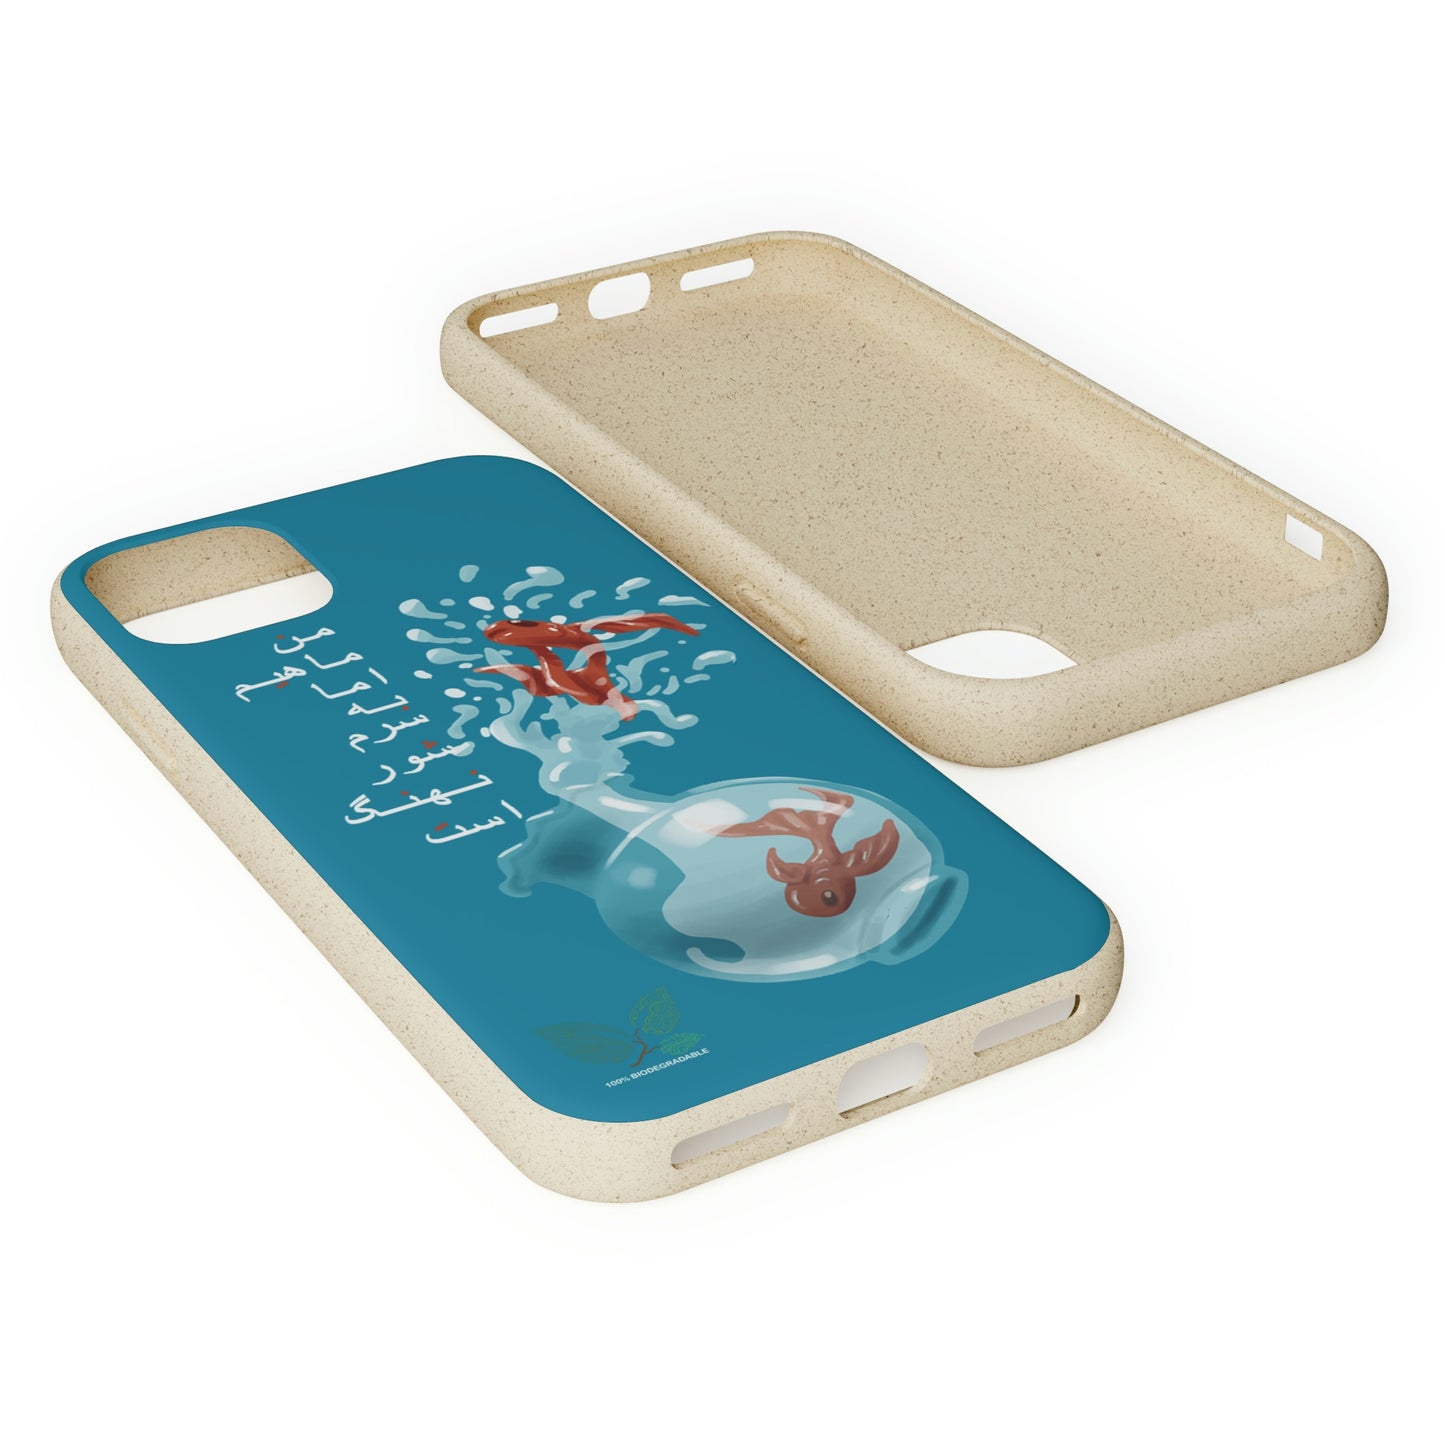 "Mahi" Biodegradable Phone Case